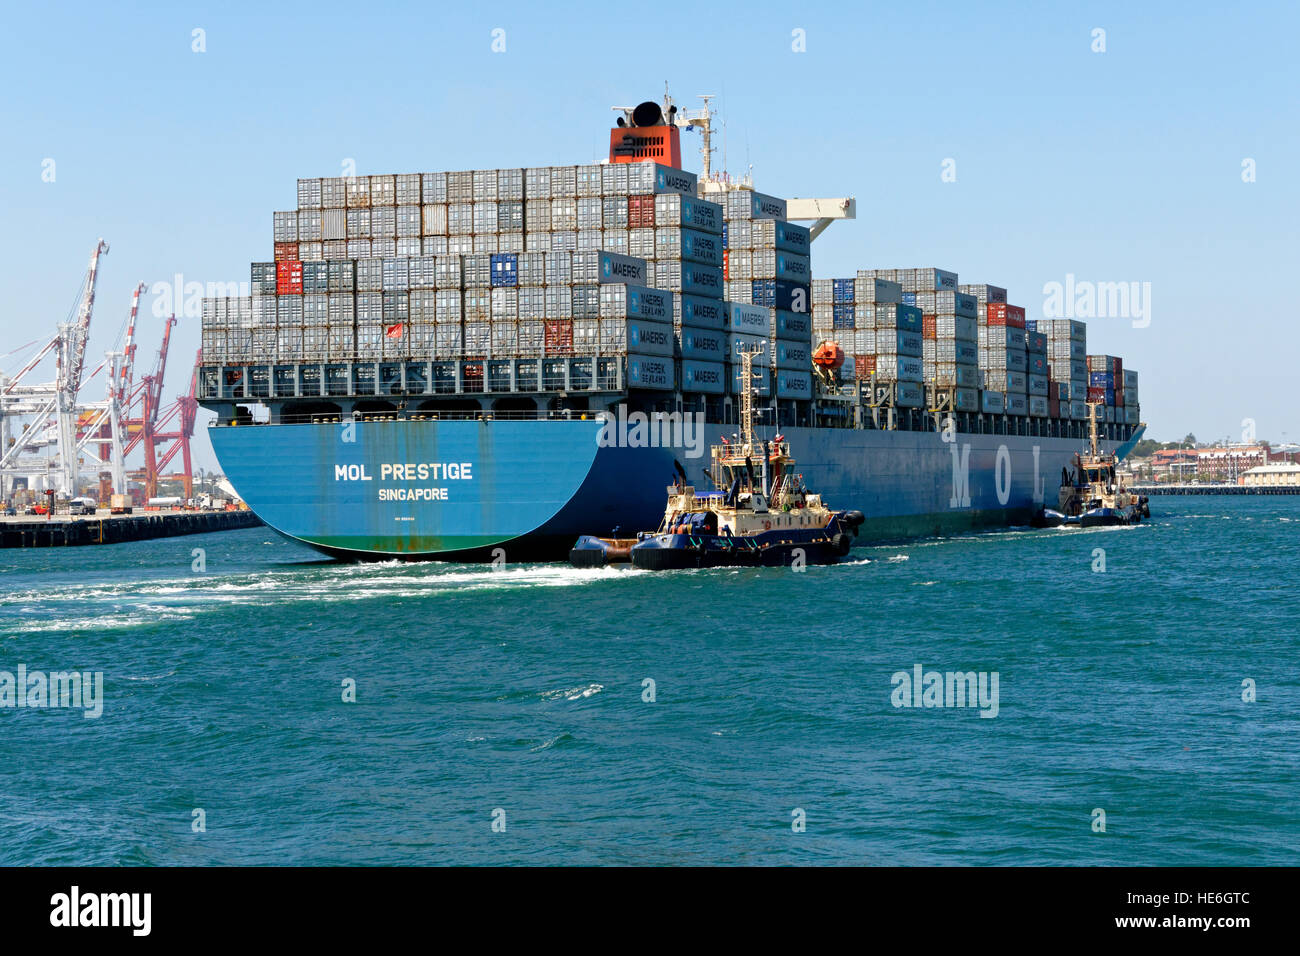 Container ship Mol Prestige Singapore, entering the Port of Fremantle, Western Australia. Stock Photo